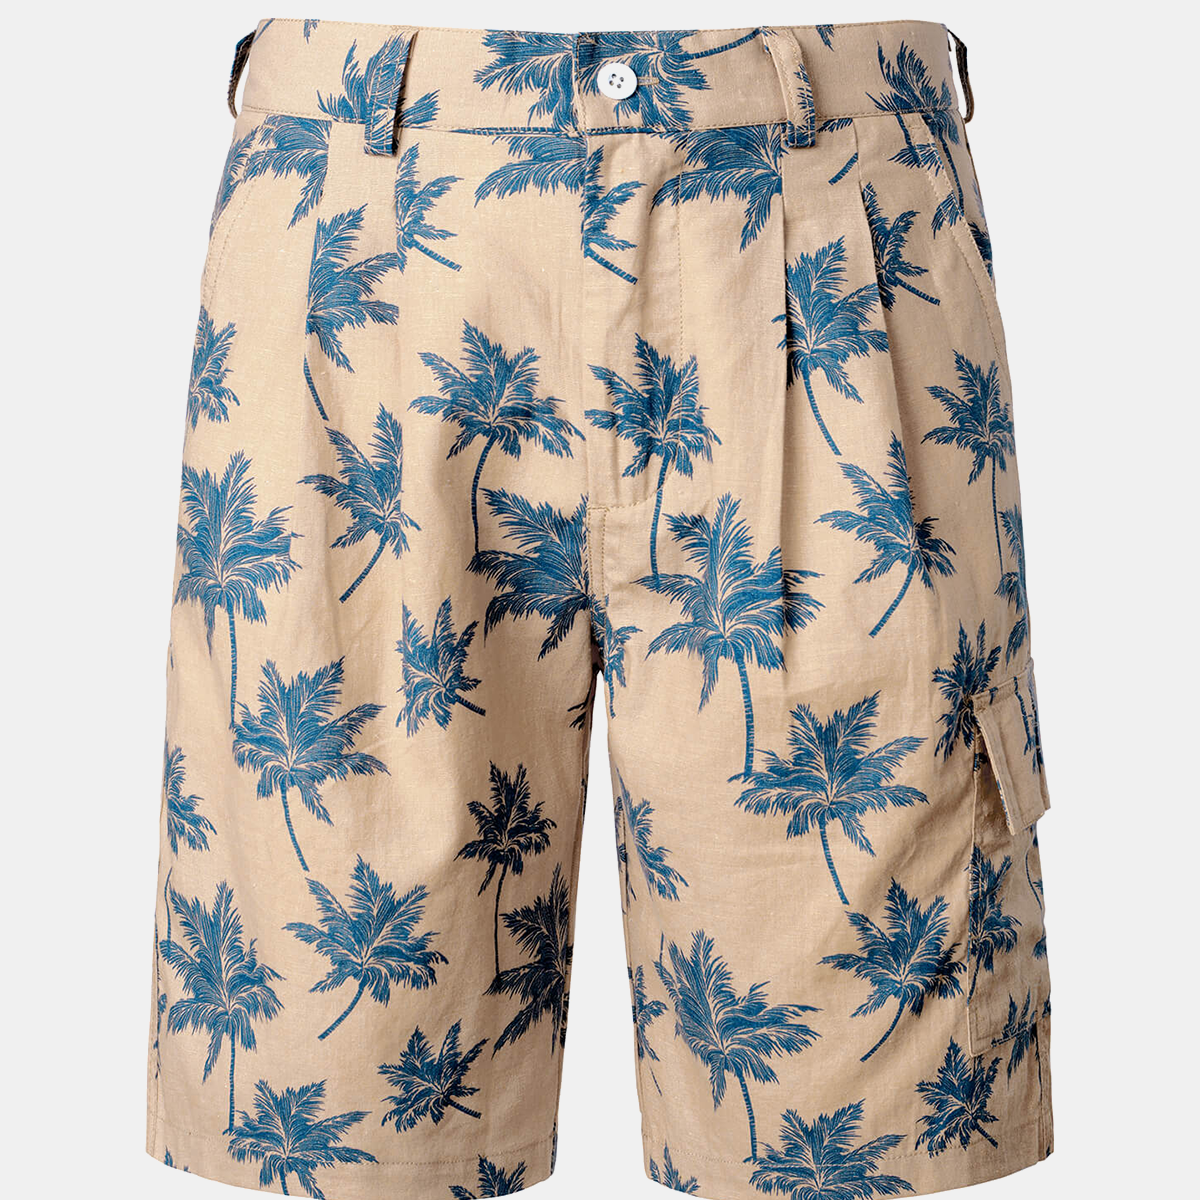 Men's Casual Graphic Print Cotton Linen Summer Beach Shorts